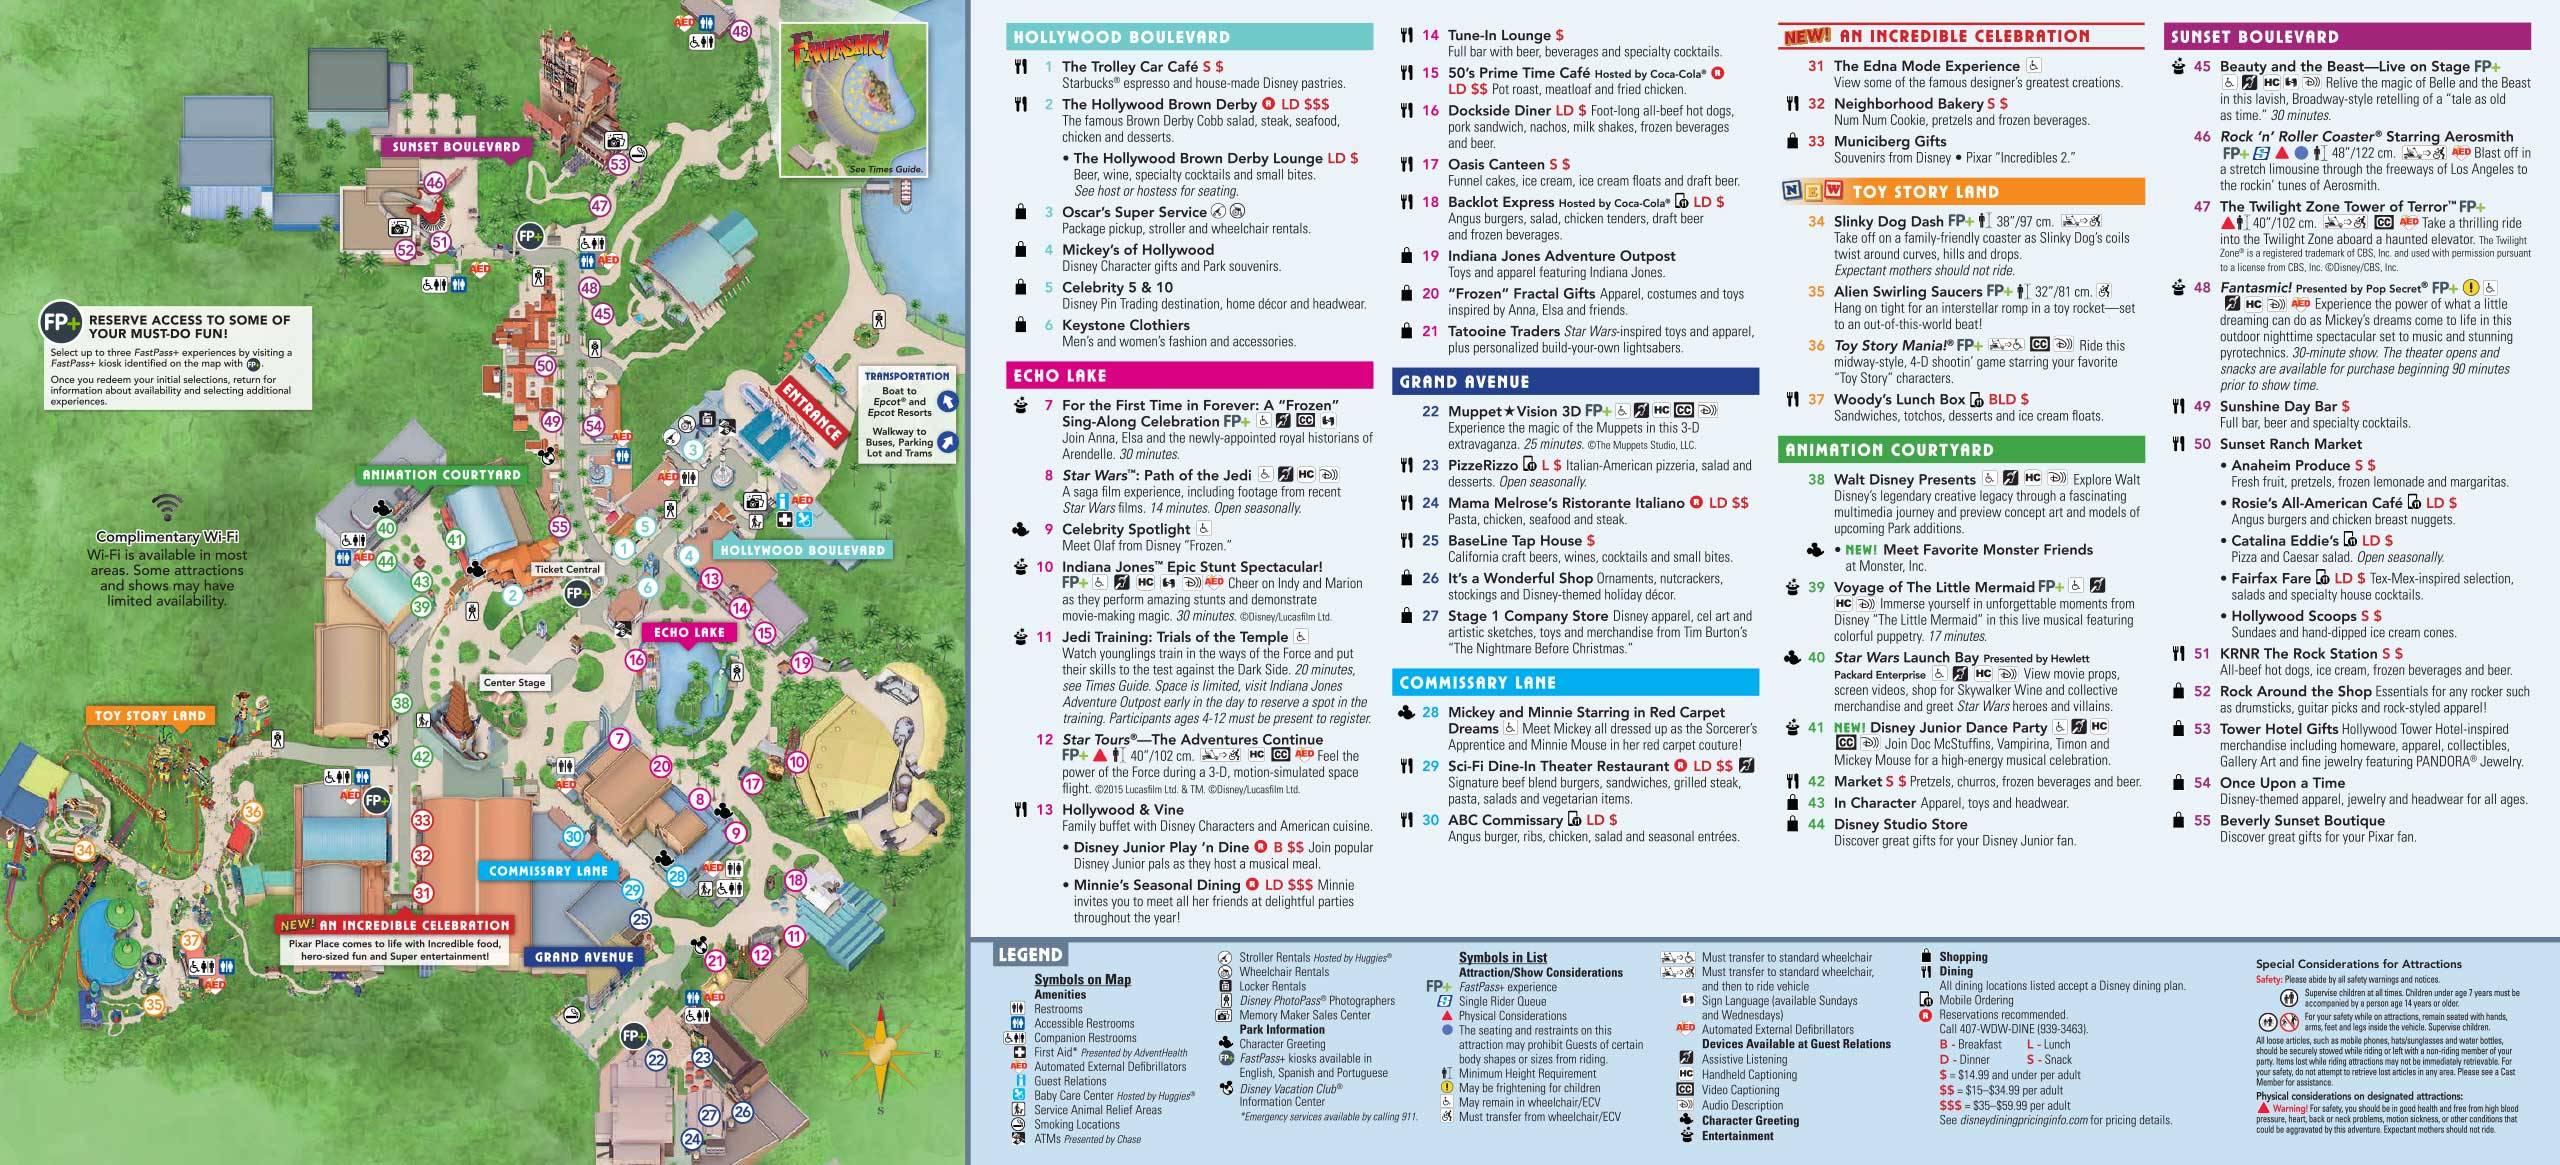 Disney's Hollywood Studios Guide Map January 2019 - Back